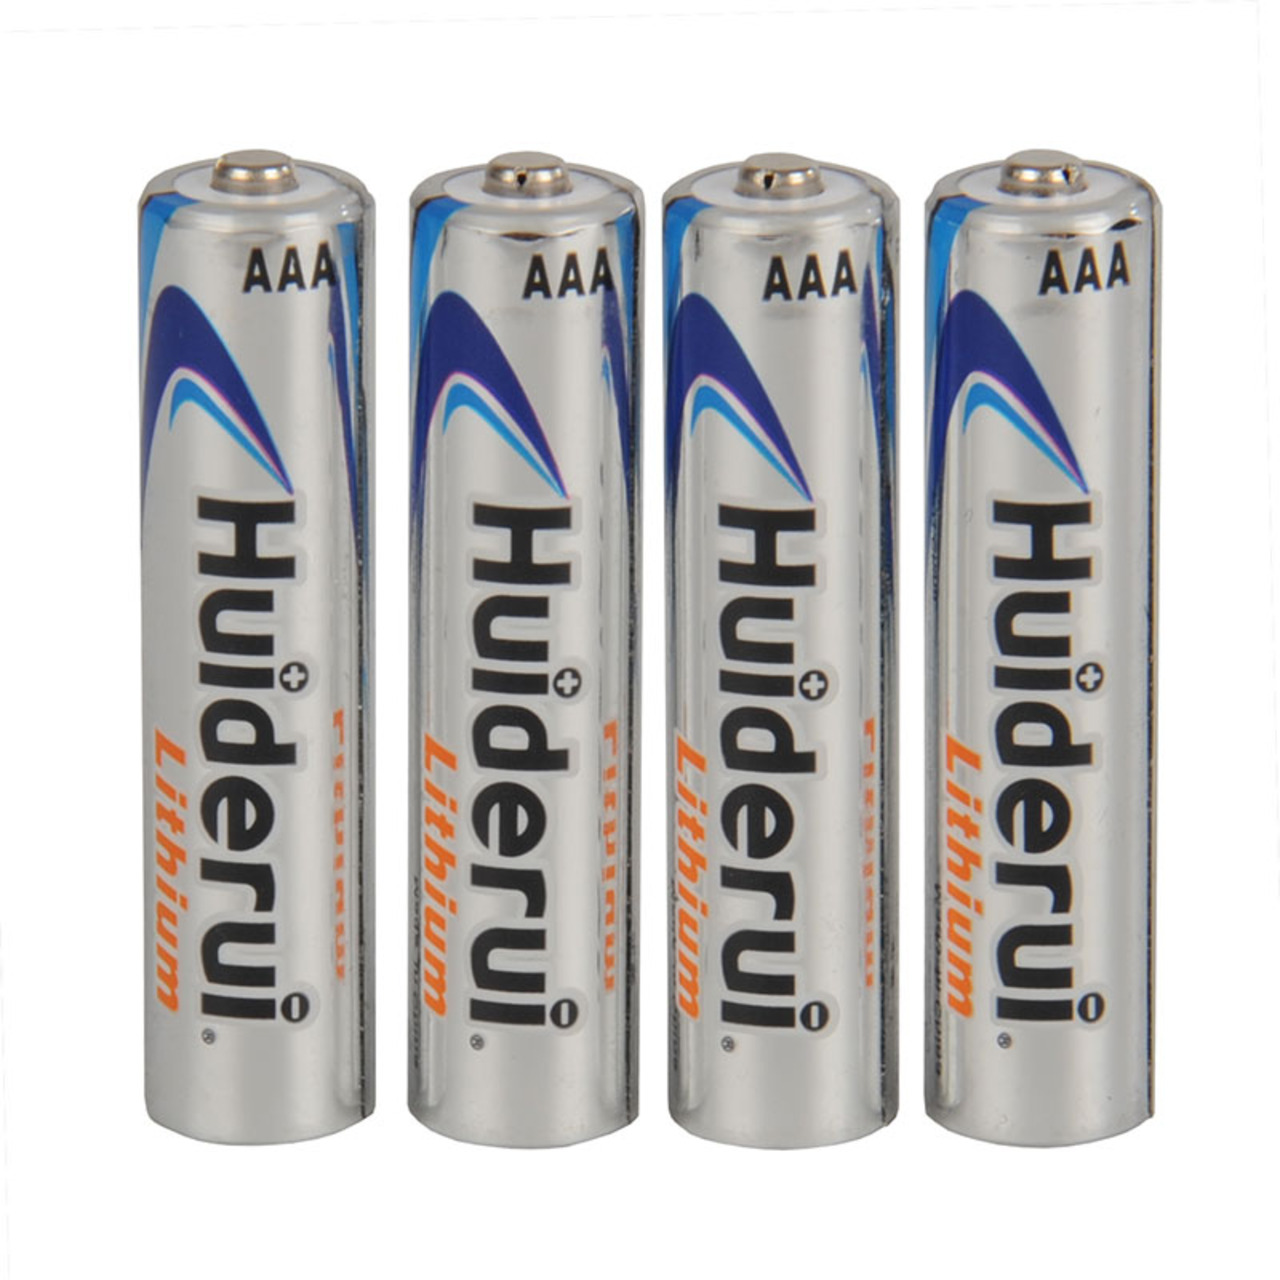 Huiderui Lithium Batterie Micro AAA- 4er-Pack unter Stromversorgung